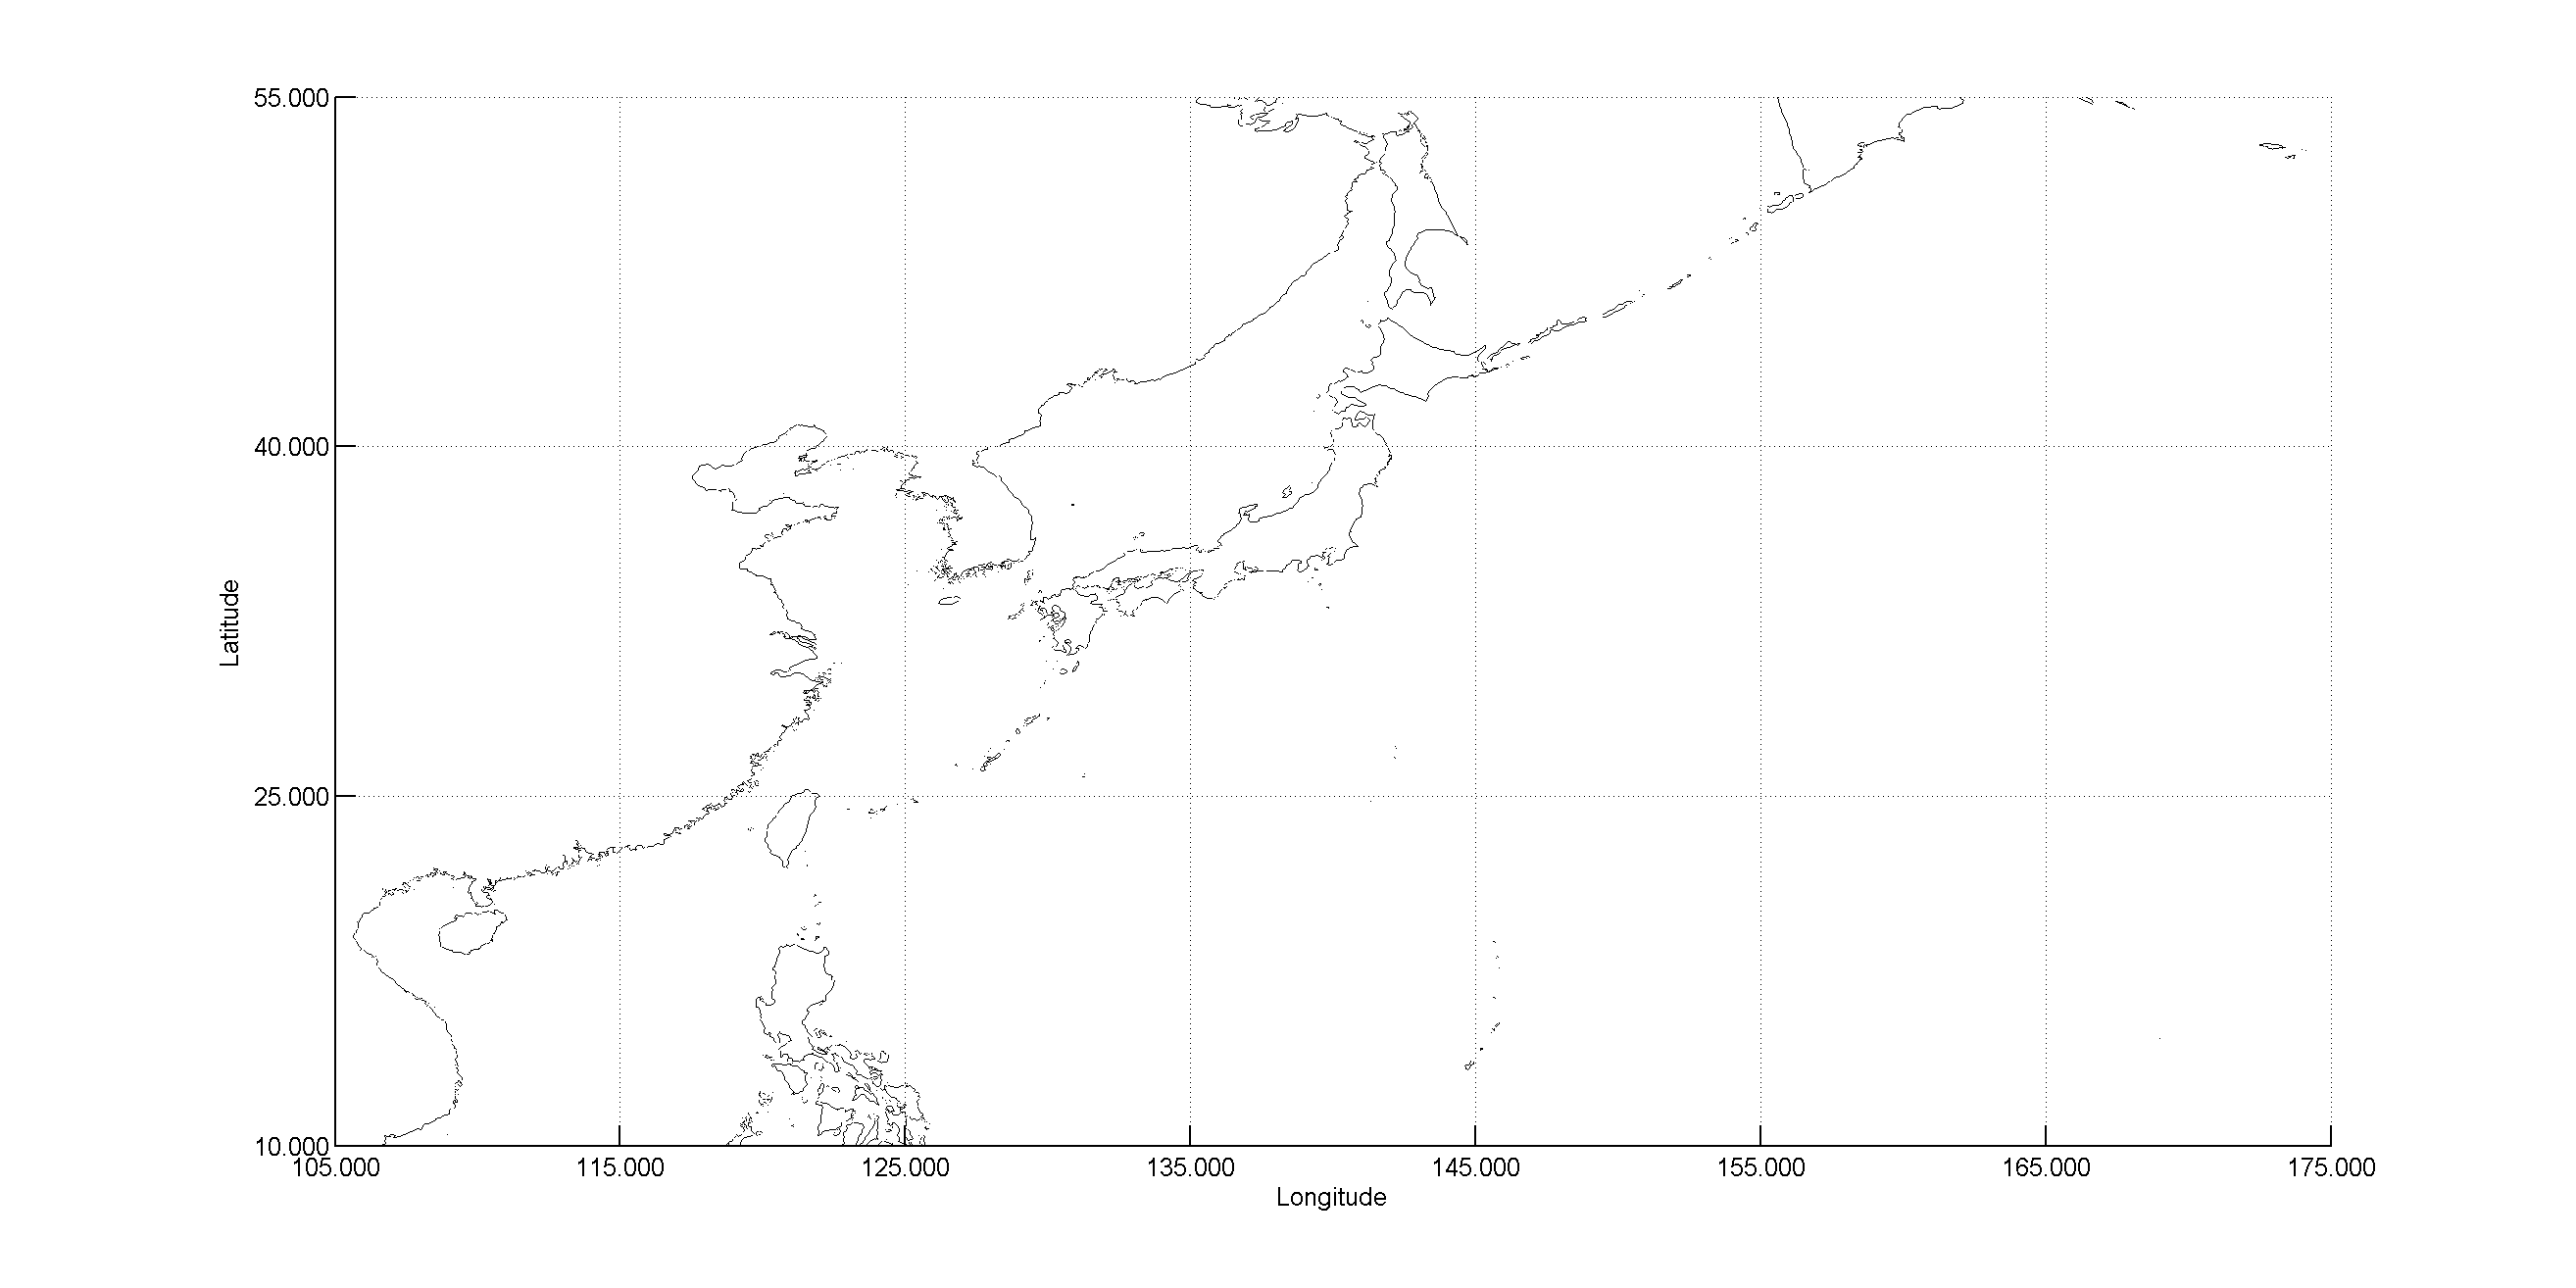 CYCLE_116 - Japan Ascending passes